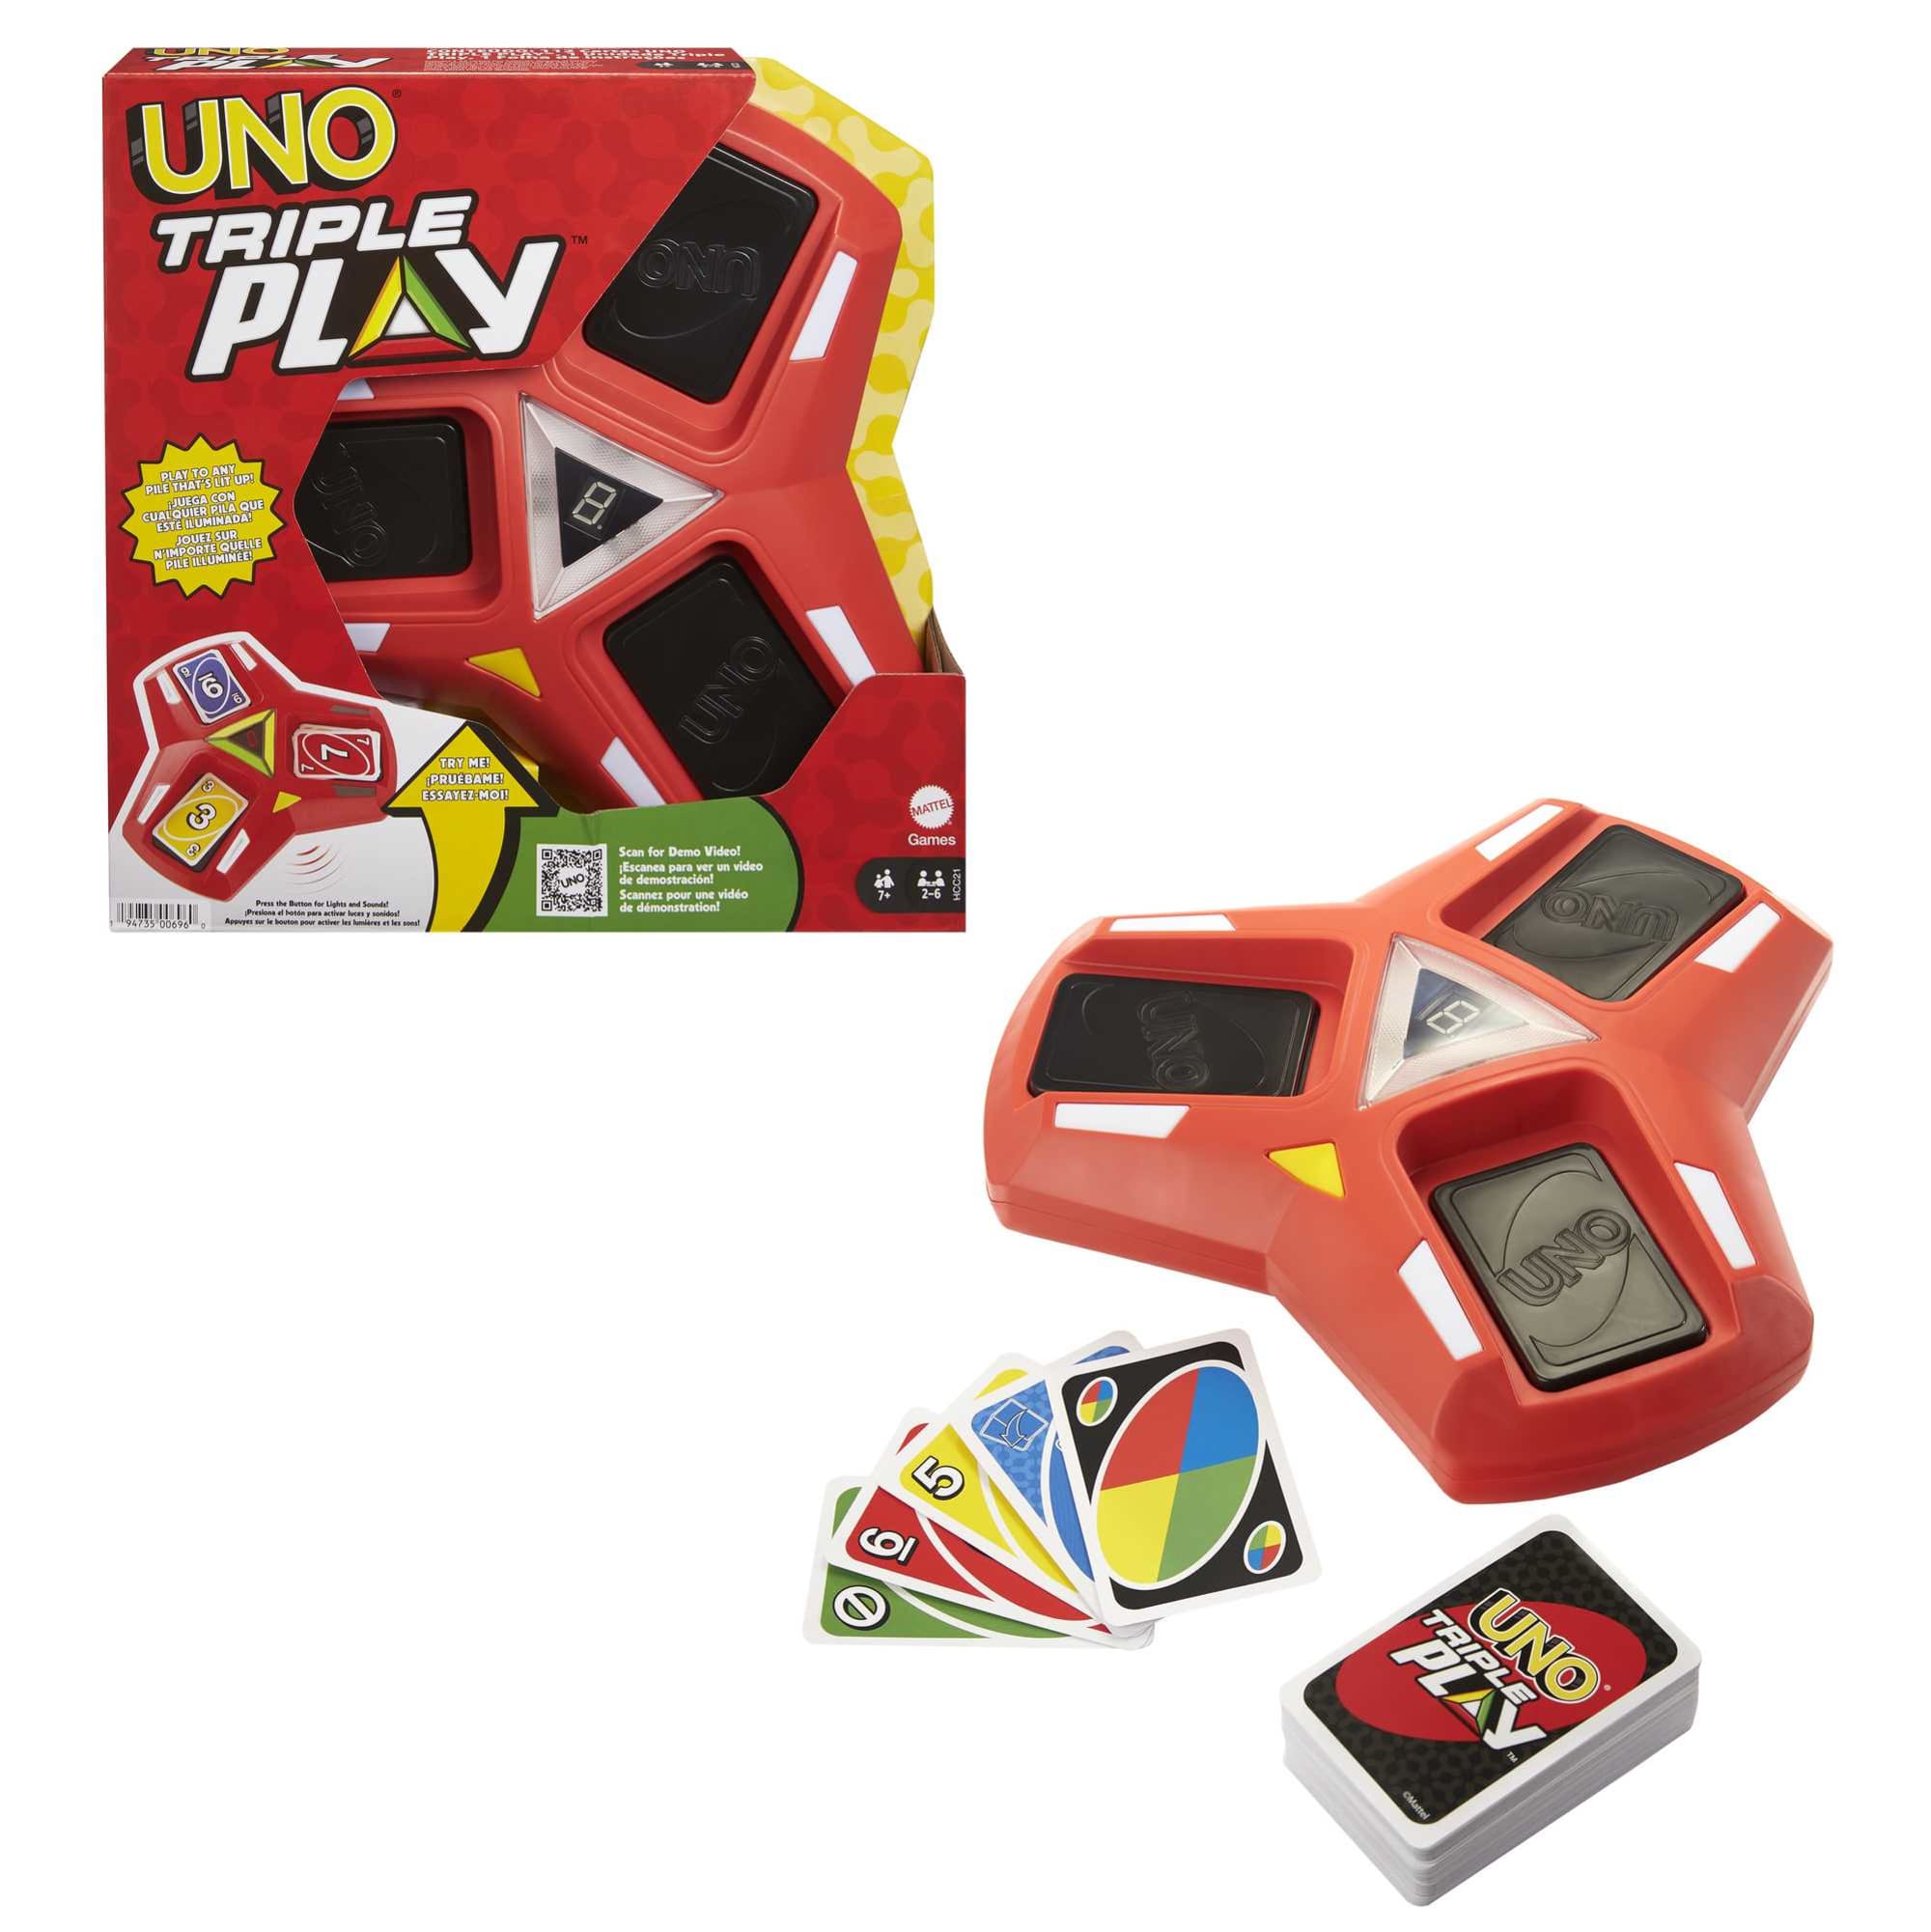 Promo Uno Triple Play chez Auchan